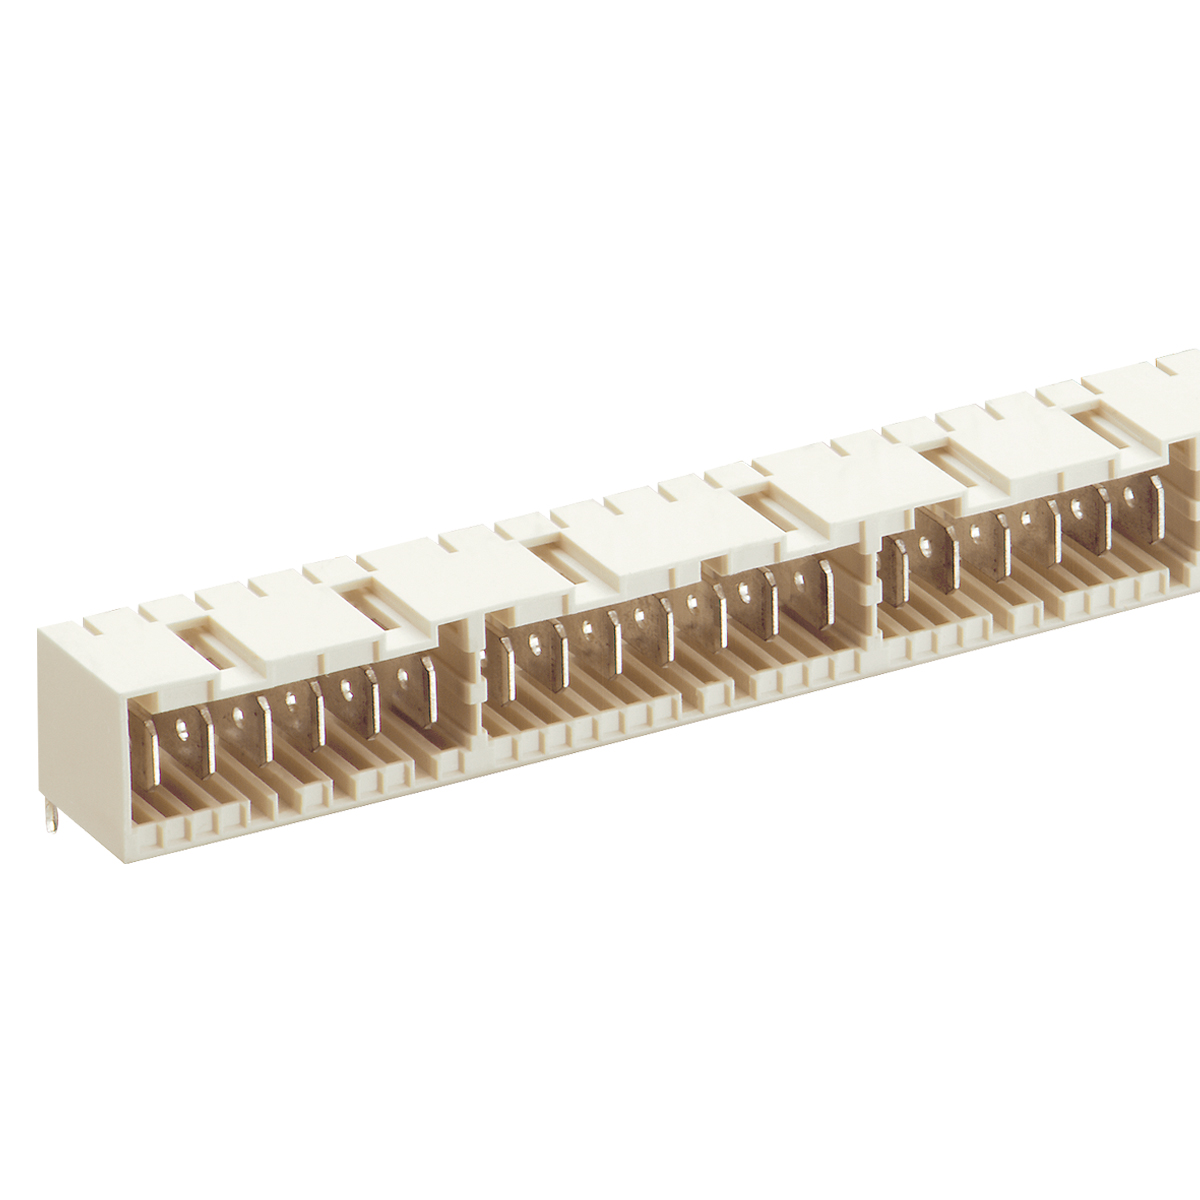 Lumberg: 3672 (Series 36 | RAST 5 connectors, pitch 5.0 mm)